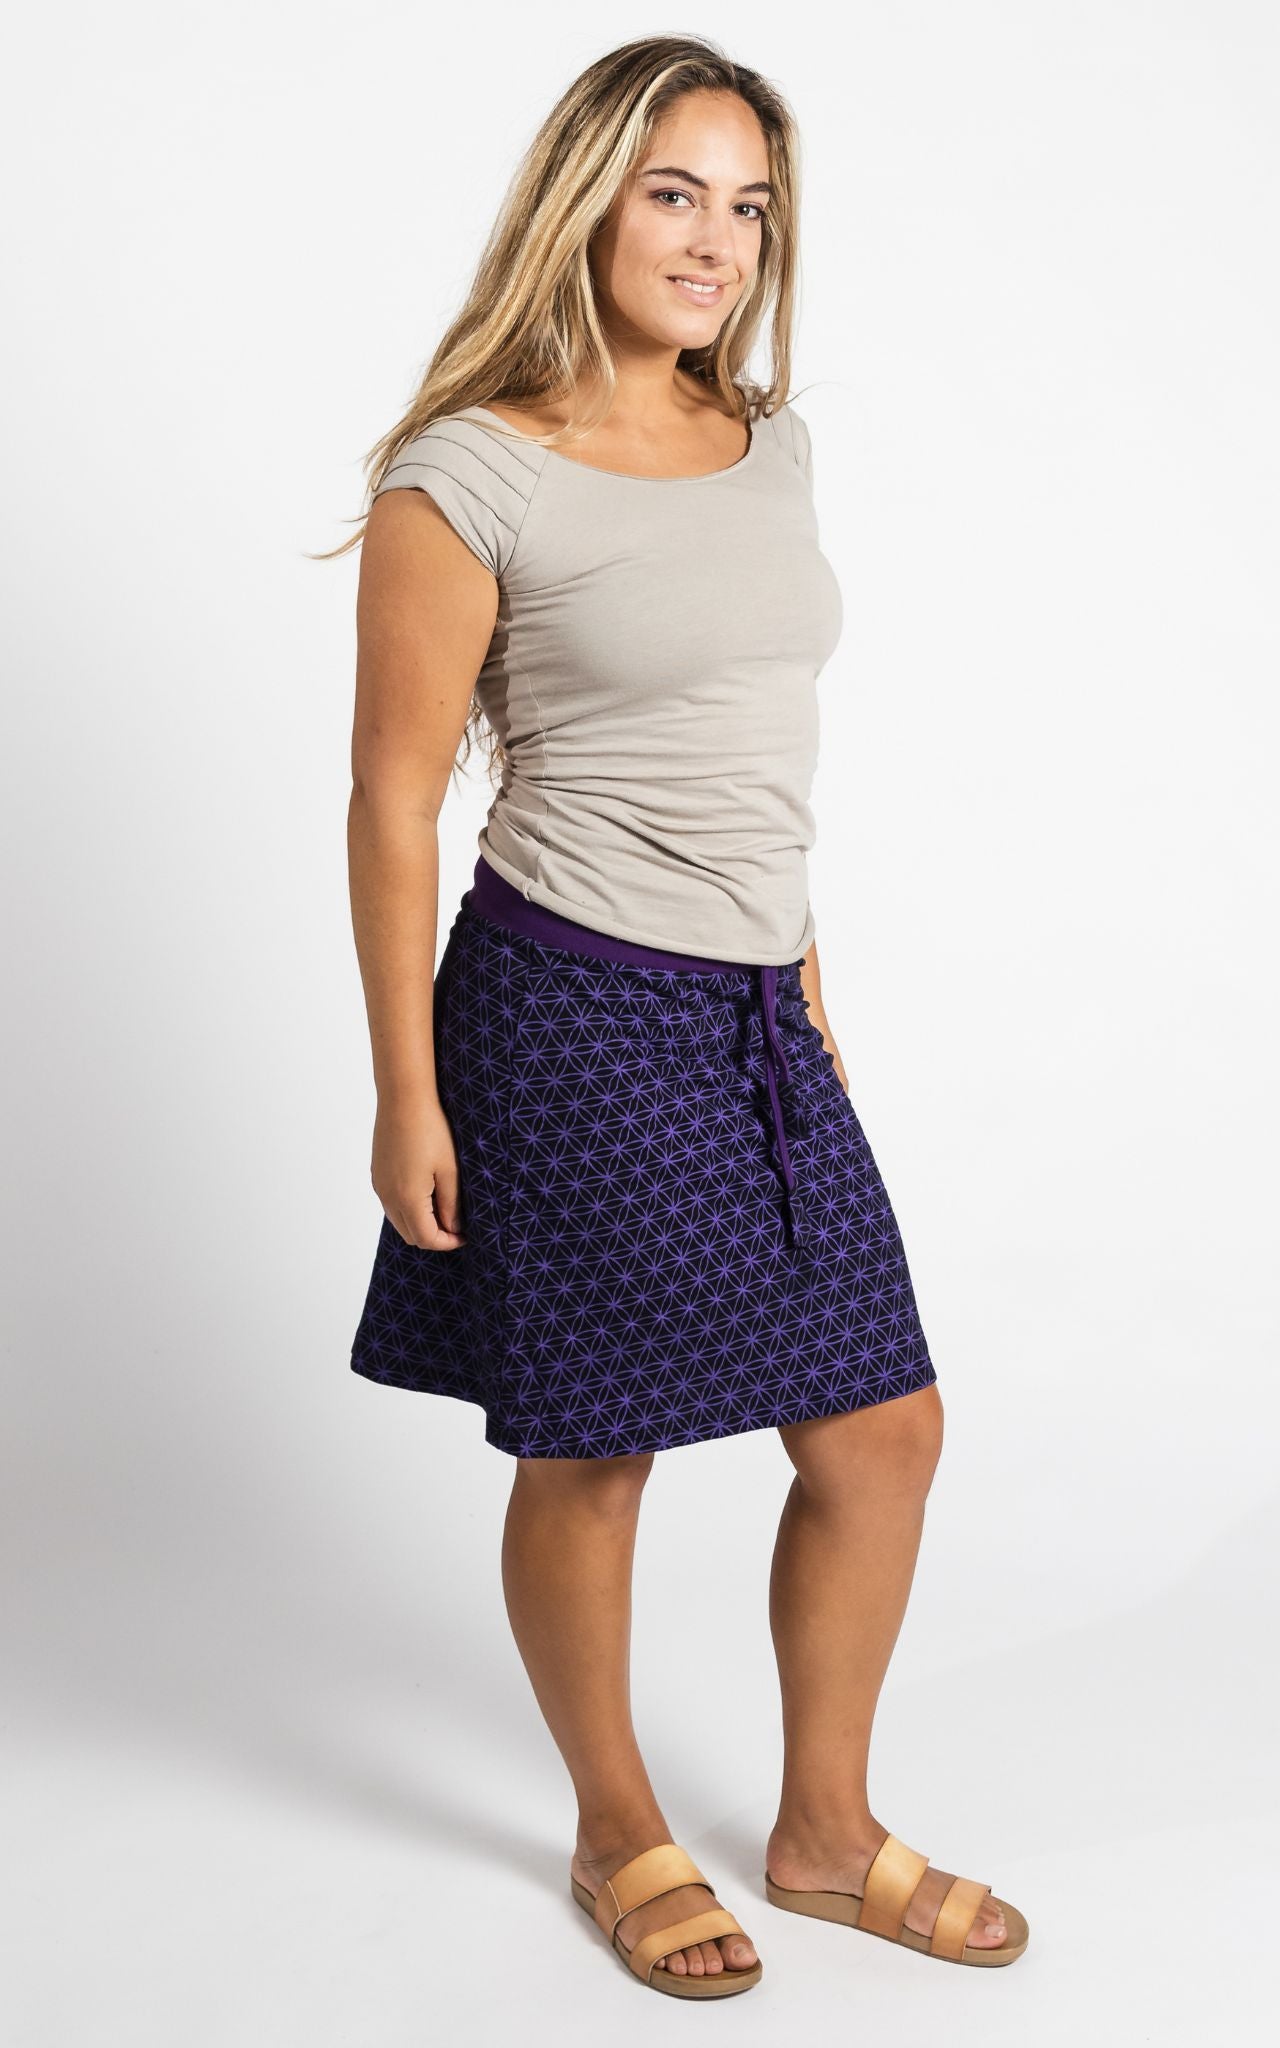 Surya Australia Ethical Cotton 'Anita' Skirt made in Nepal - Purple